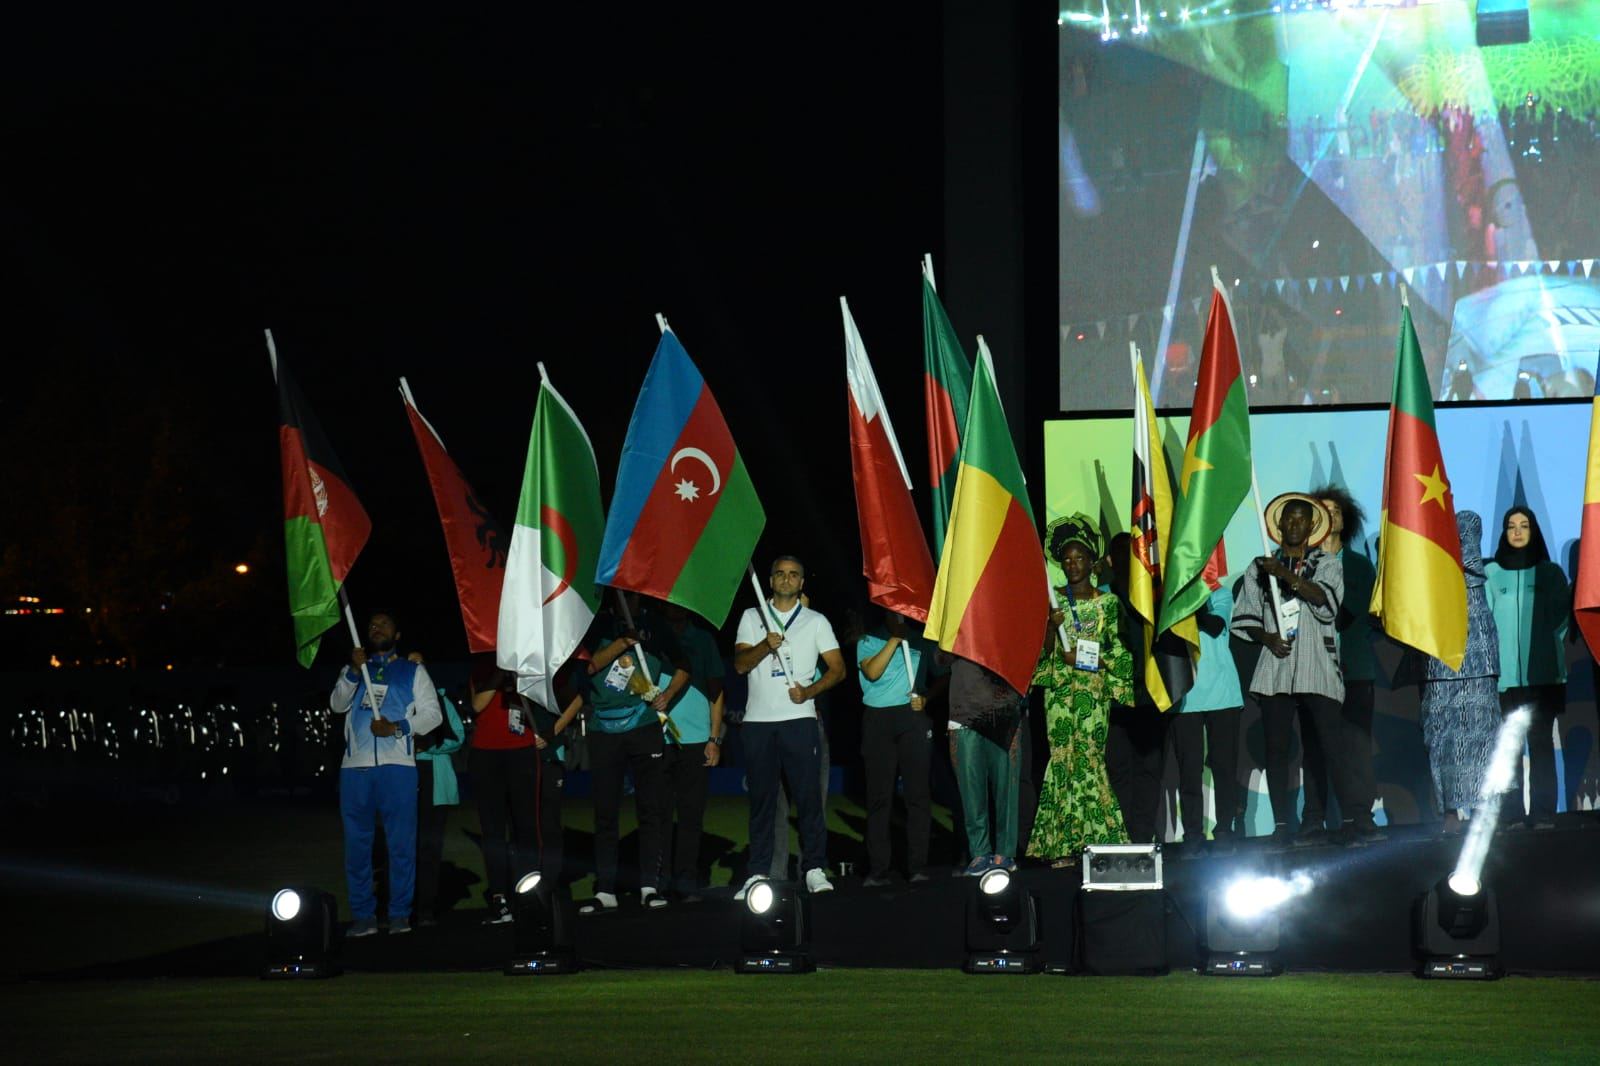 Türkiye hosts official closing ceremony of V Islamic Solidarity Games (PHOTO)